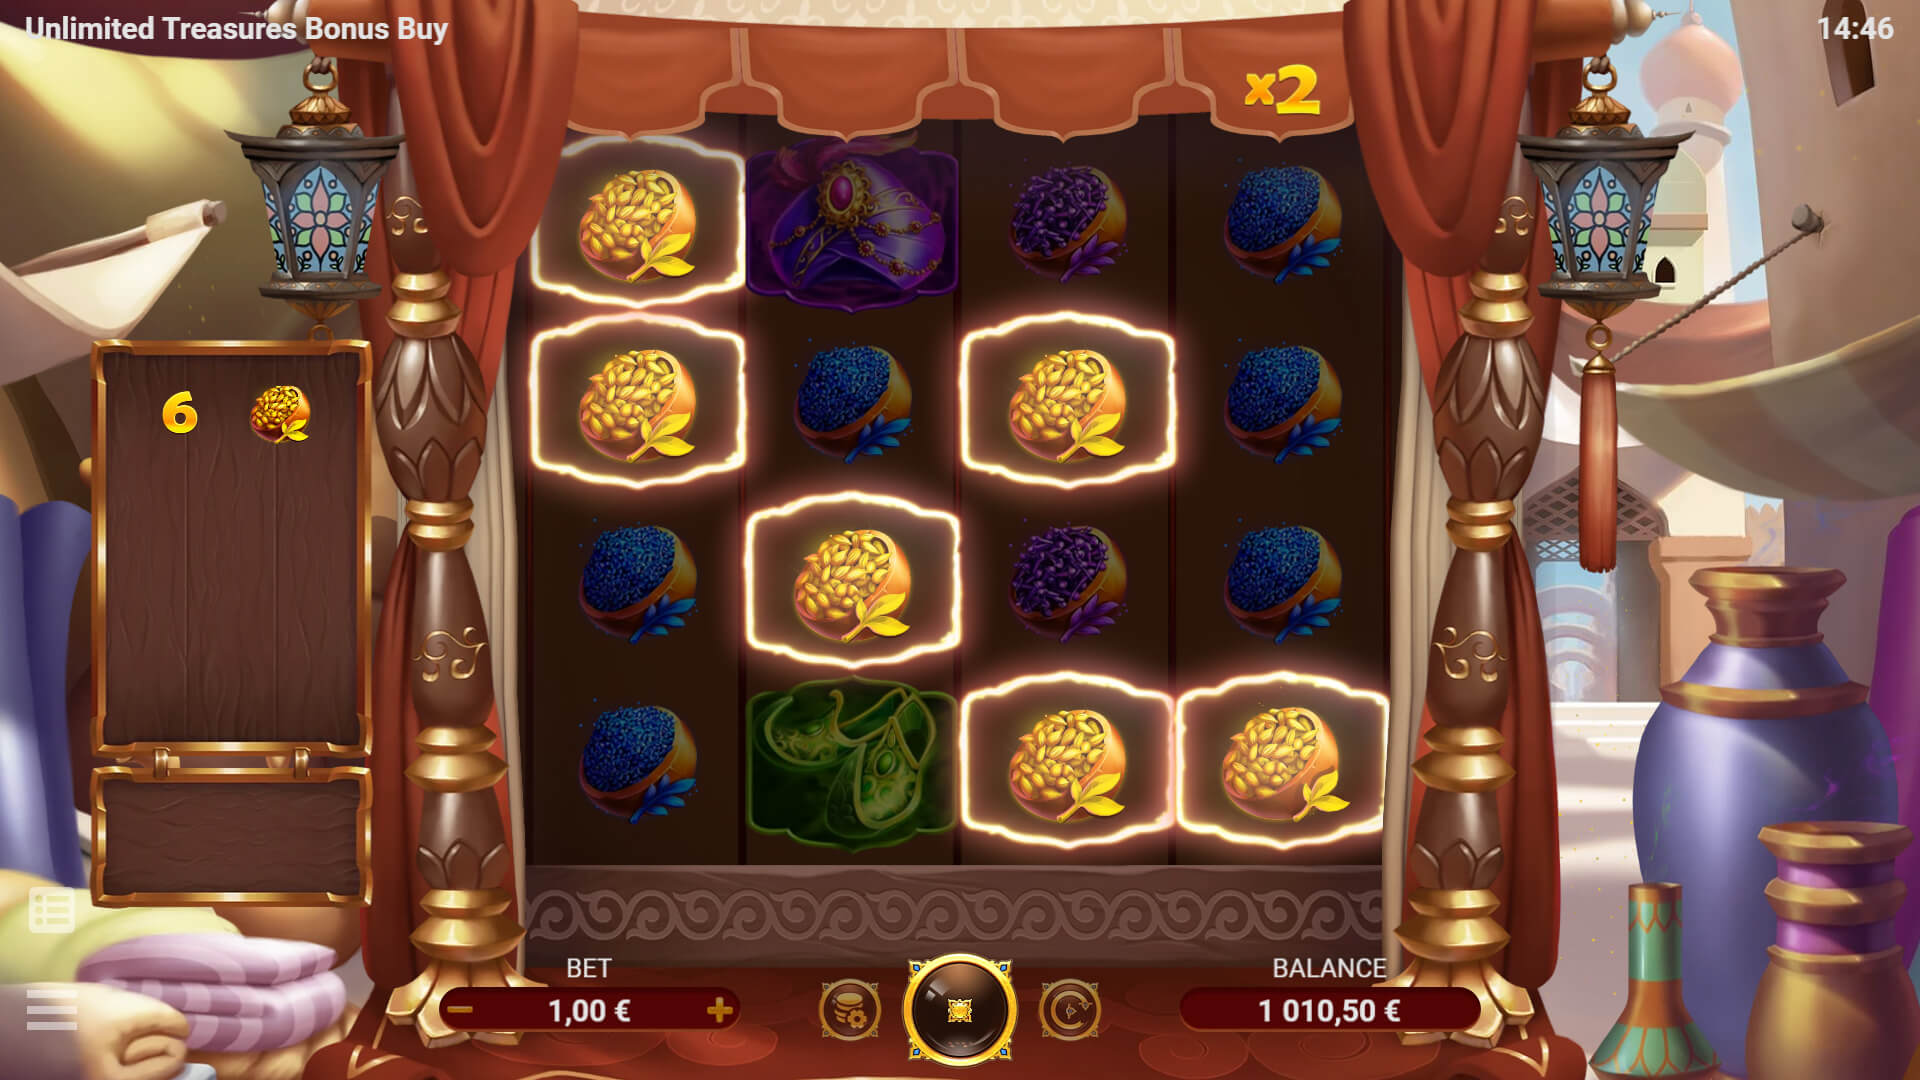 Unlimited Treasures Bonus Buy Evoplay slotxo mobile